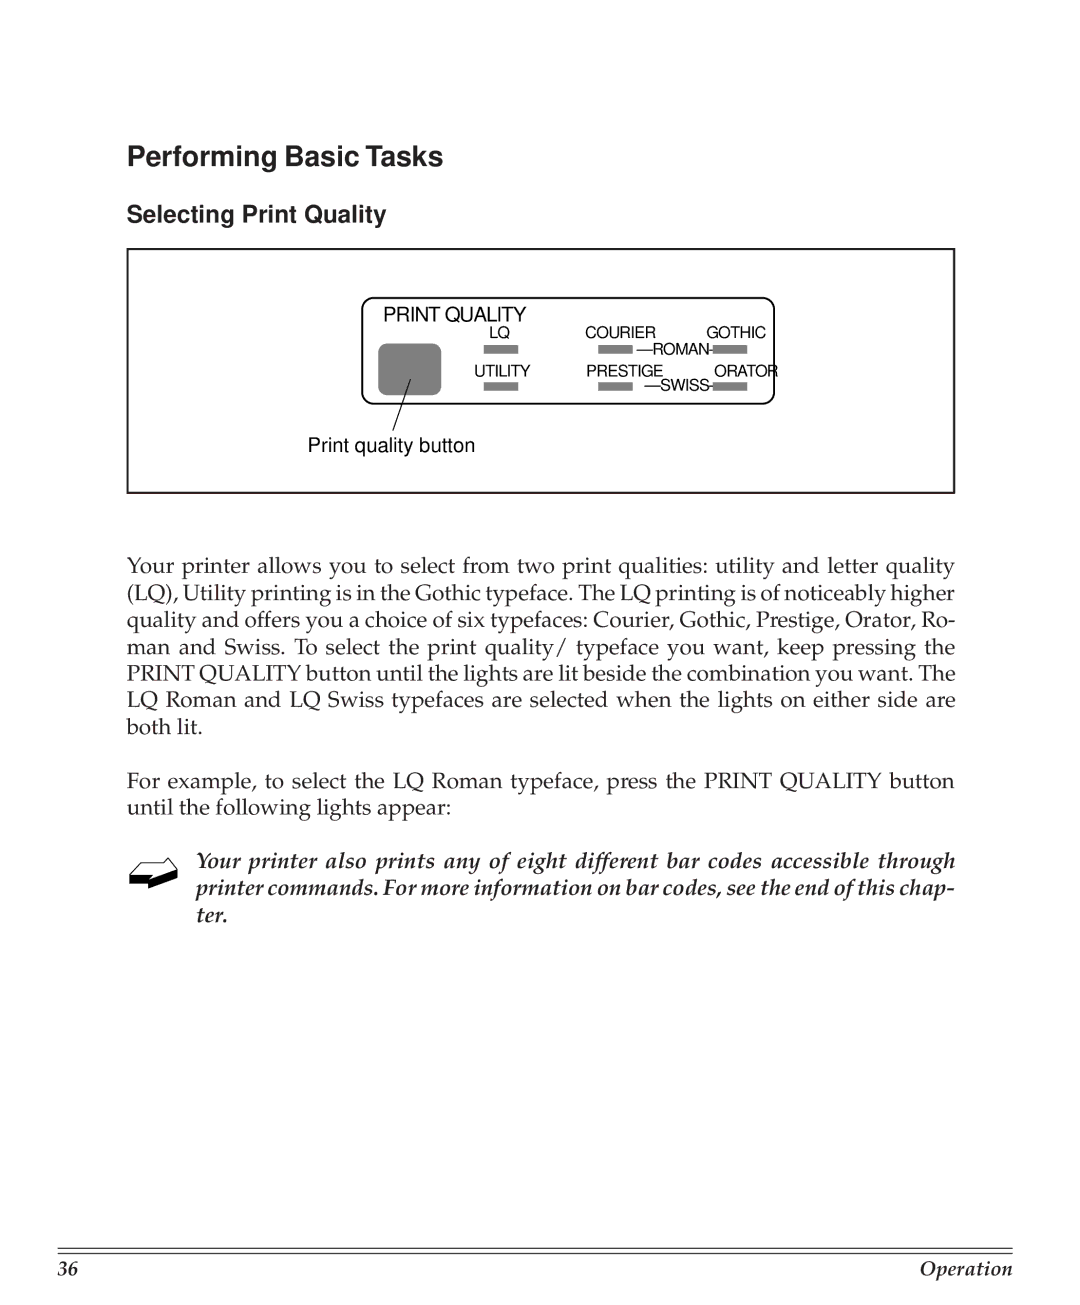 Turbo Chef Technologies 390/391 manual Performing Basic Tasks, Selecting Print Quality 